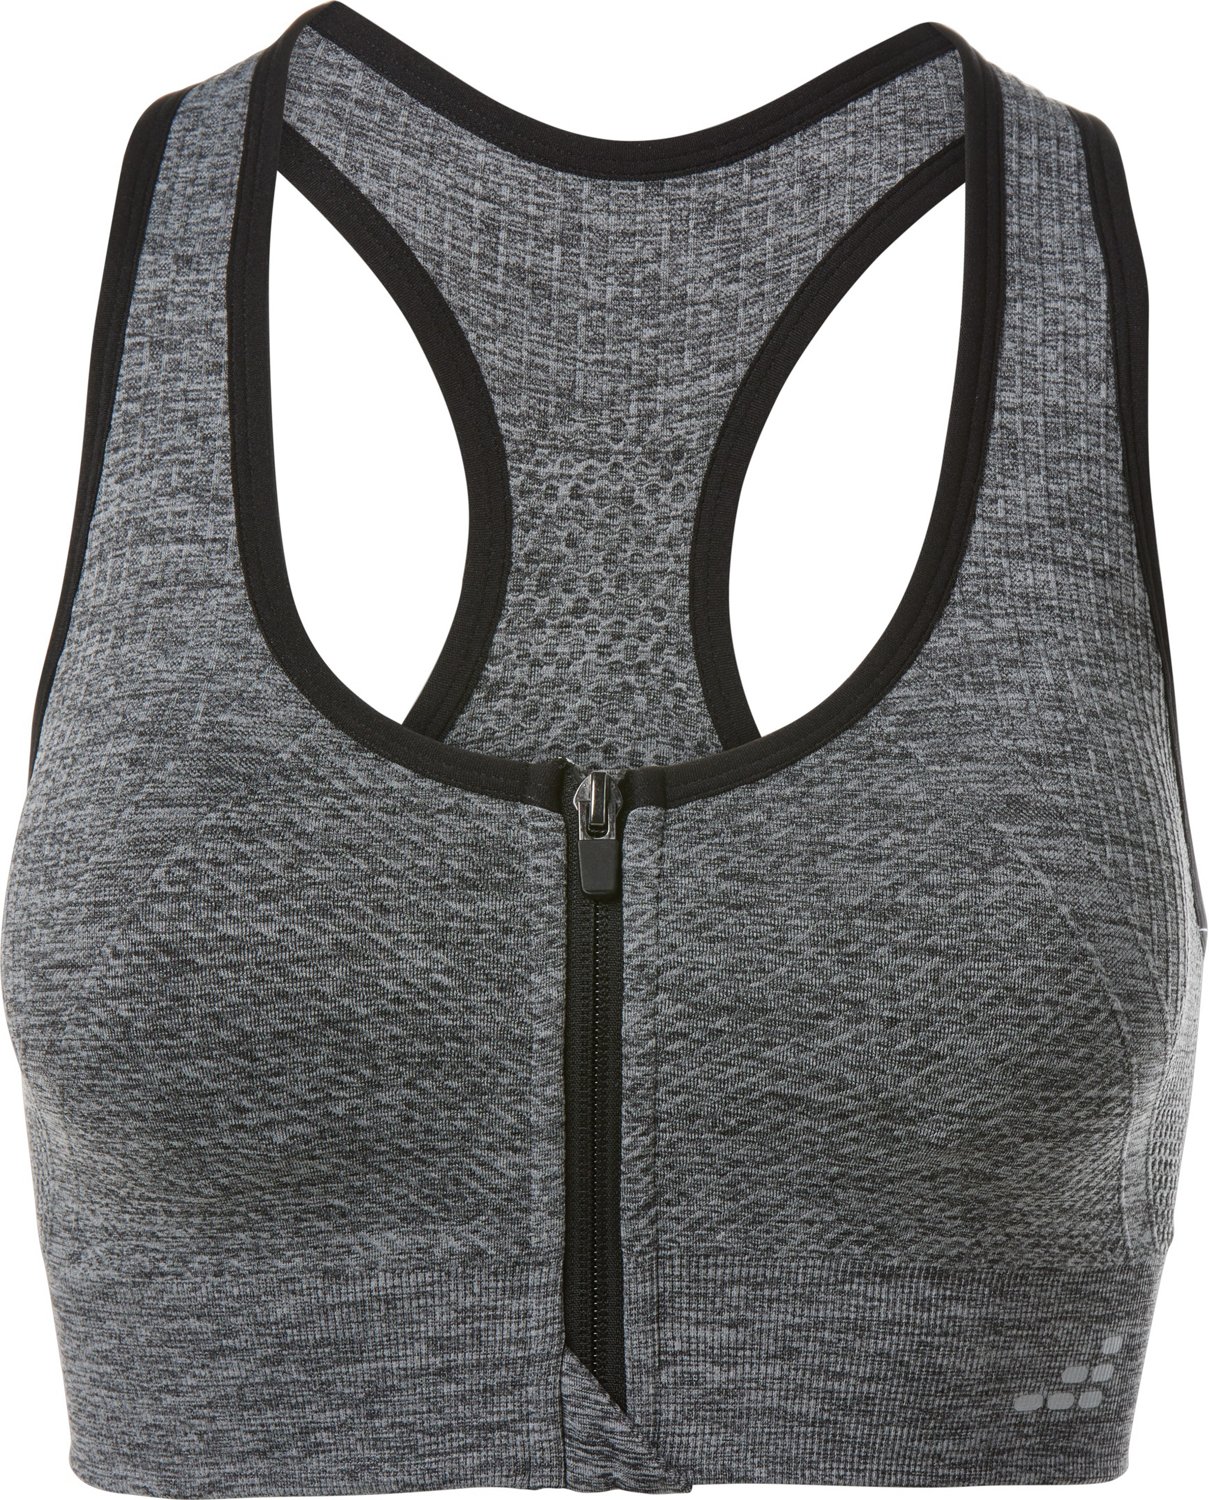 SleekStretch zip-front sports bra  Front zip sports bra, Sports bra,  Workout outfit